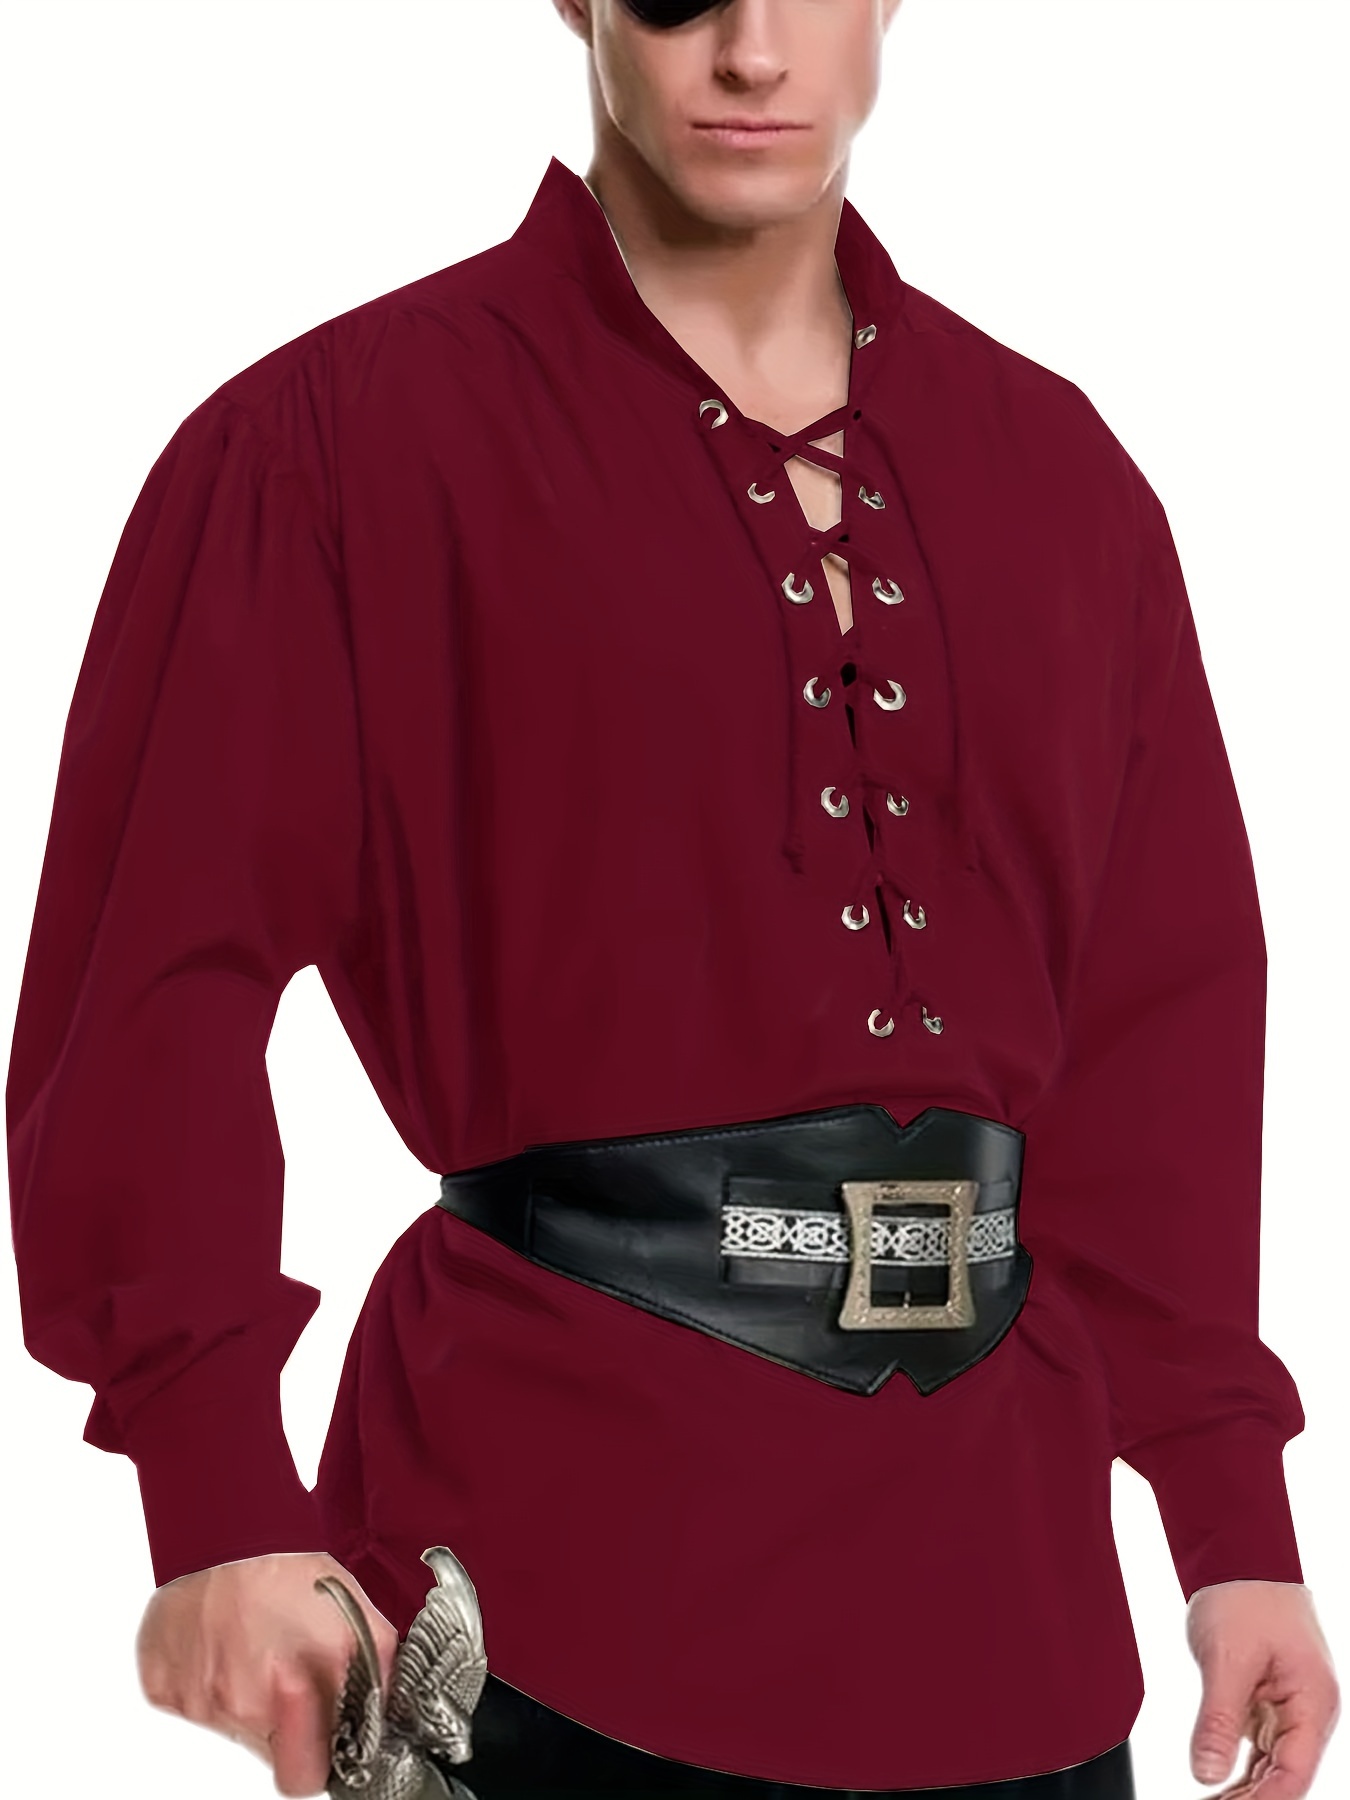 Black Laced Cotton Shirt, Medieval Mens Wear